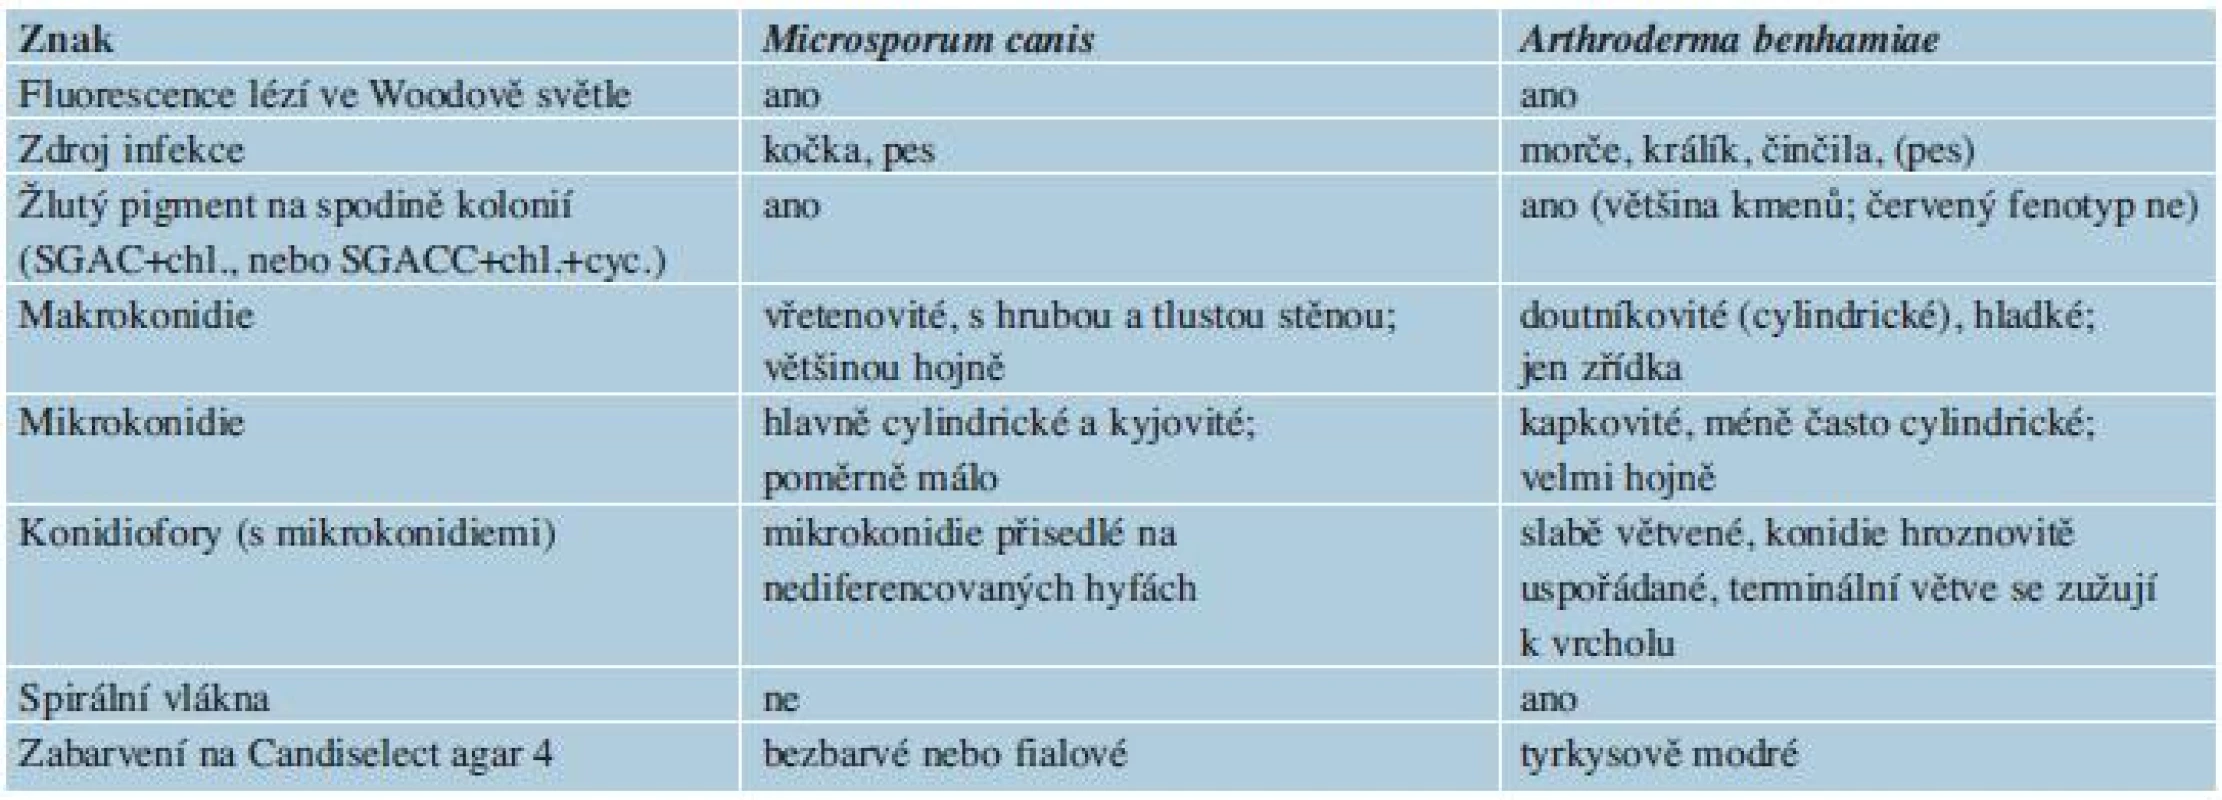 Shody a rozdíly mezi &lt;i&gt;Arthroderma benhamiae&lt;/i&gt; a &lt;i&gt;Microsporum canis&lt;/i&gt;